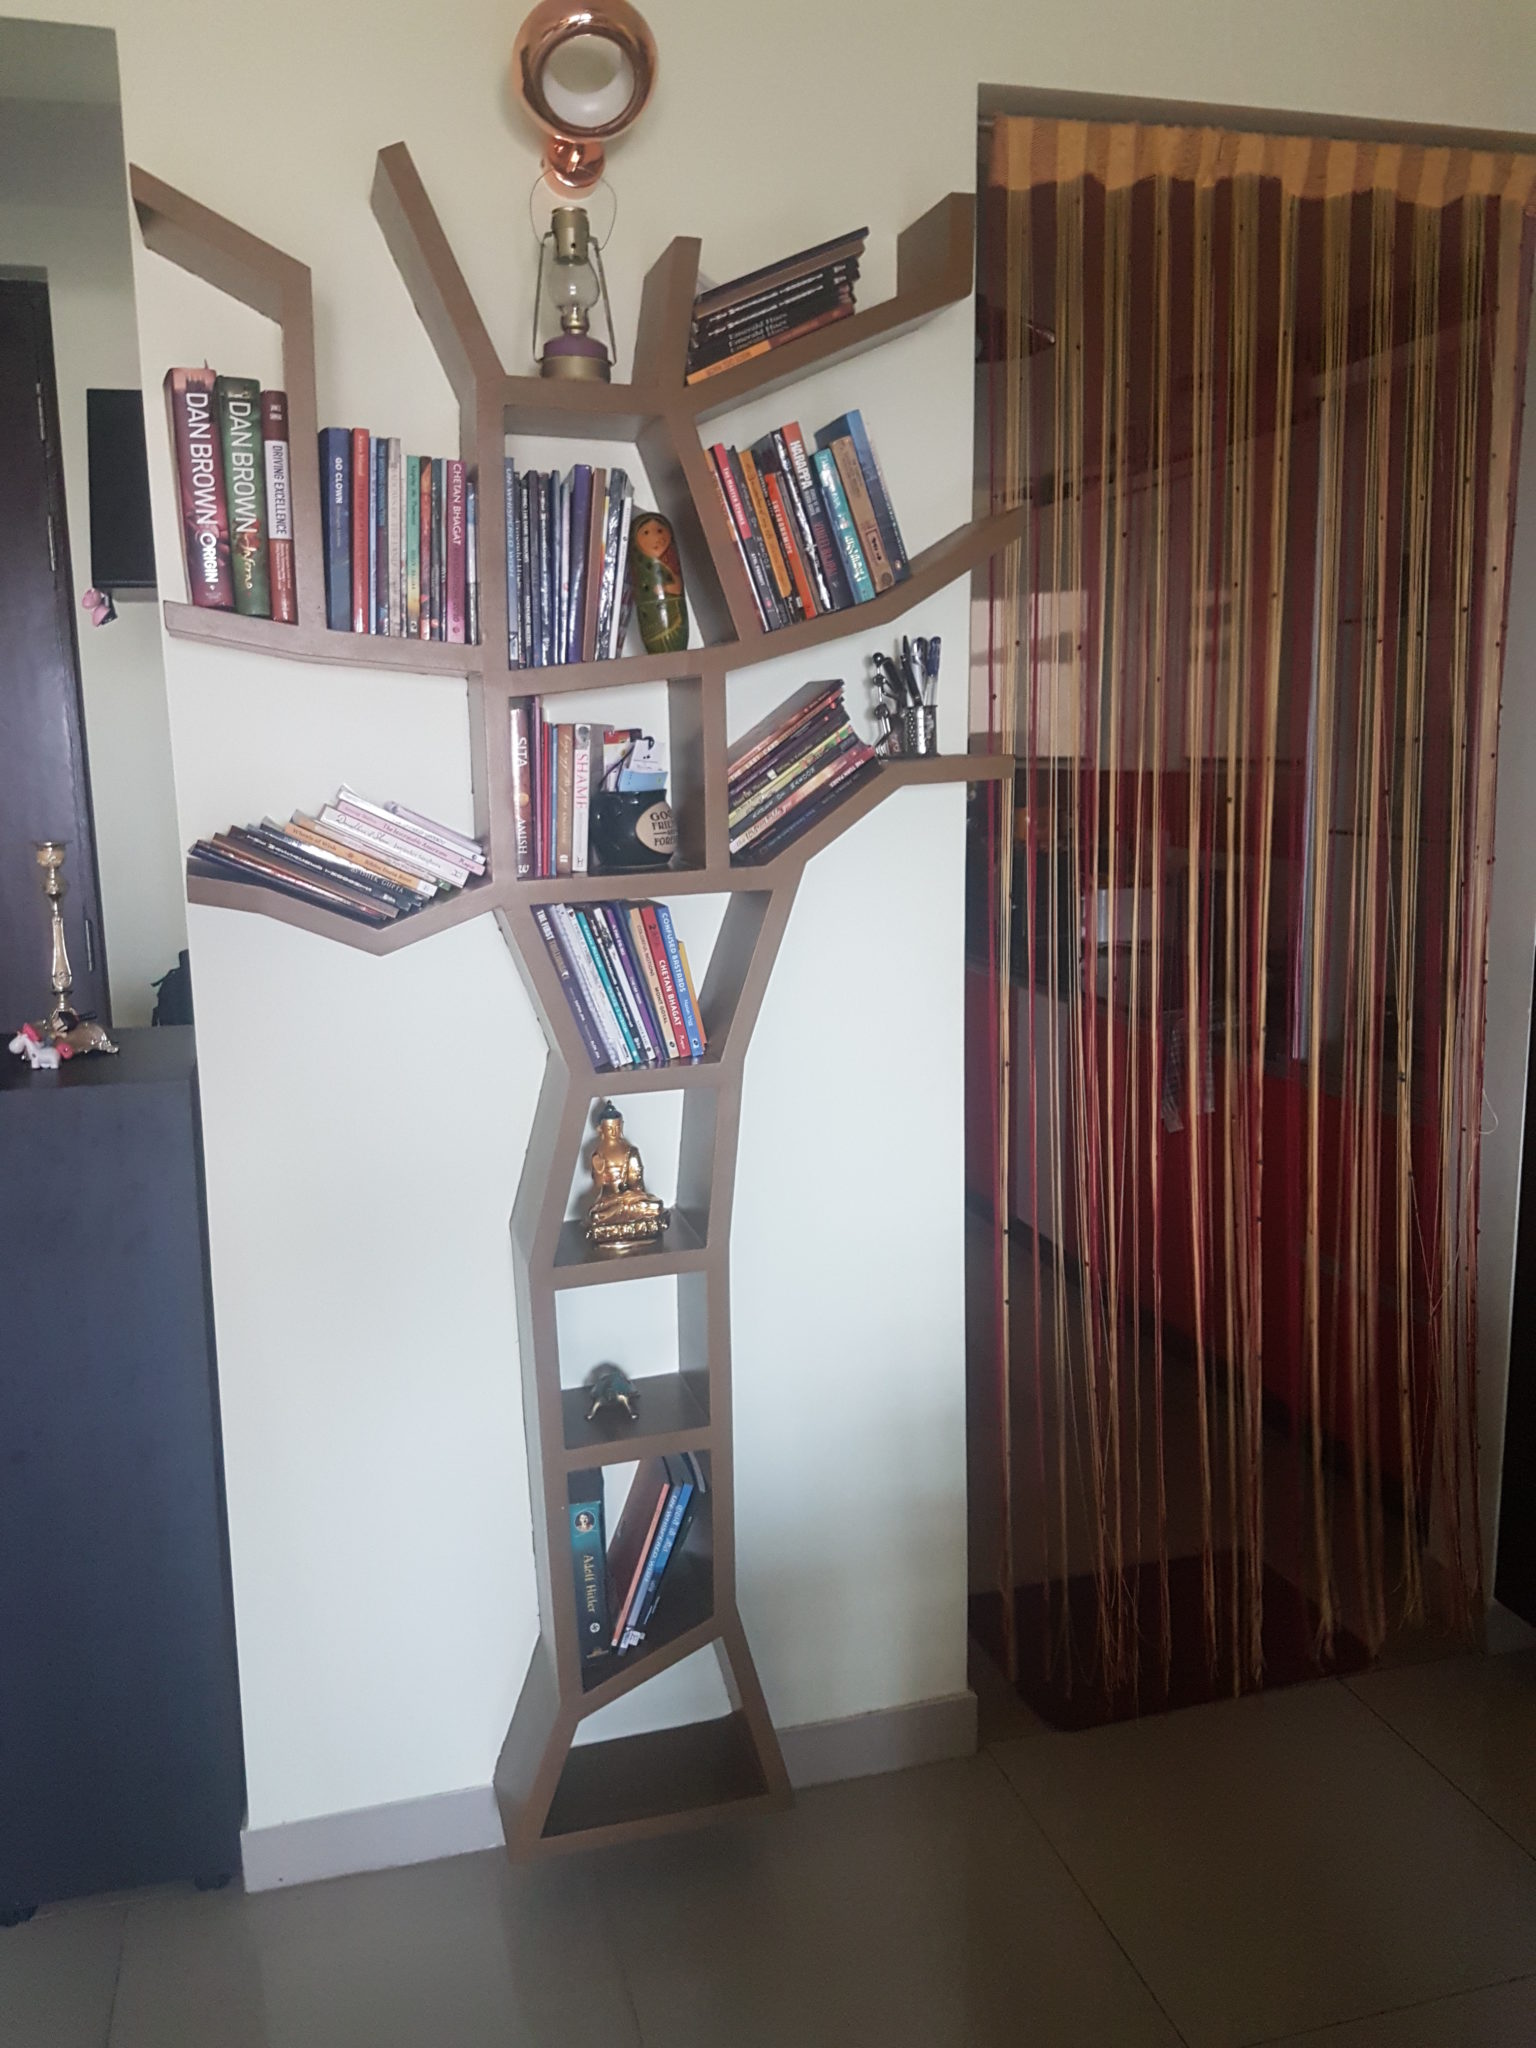 Tree Bookshelf and Branch Bookshelf on opposite walls